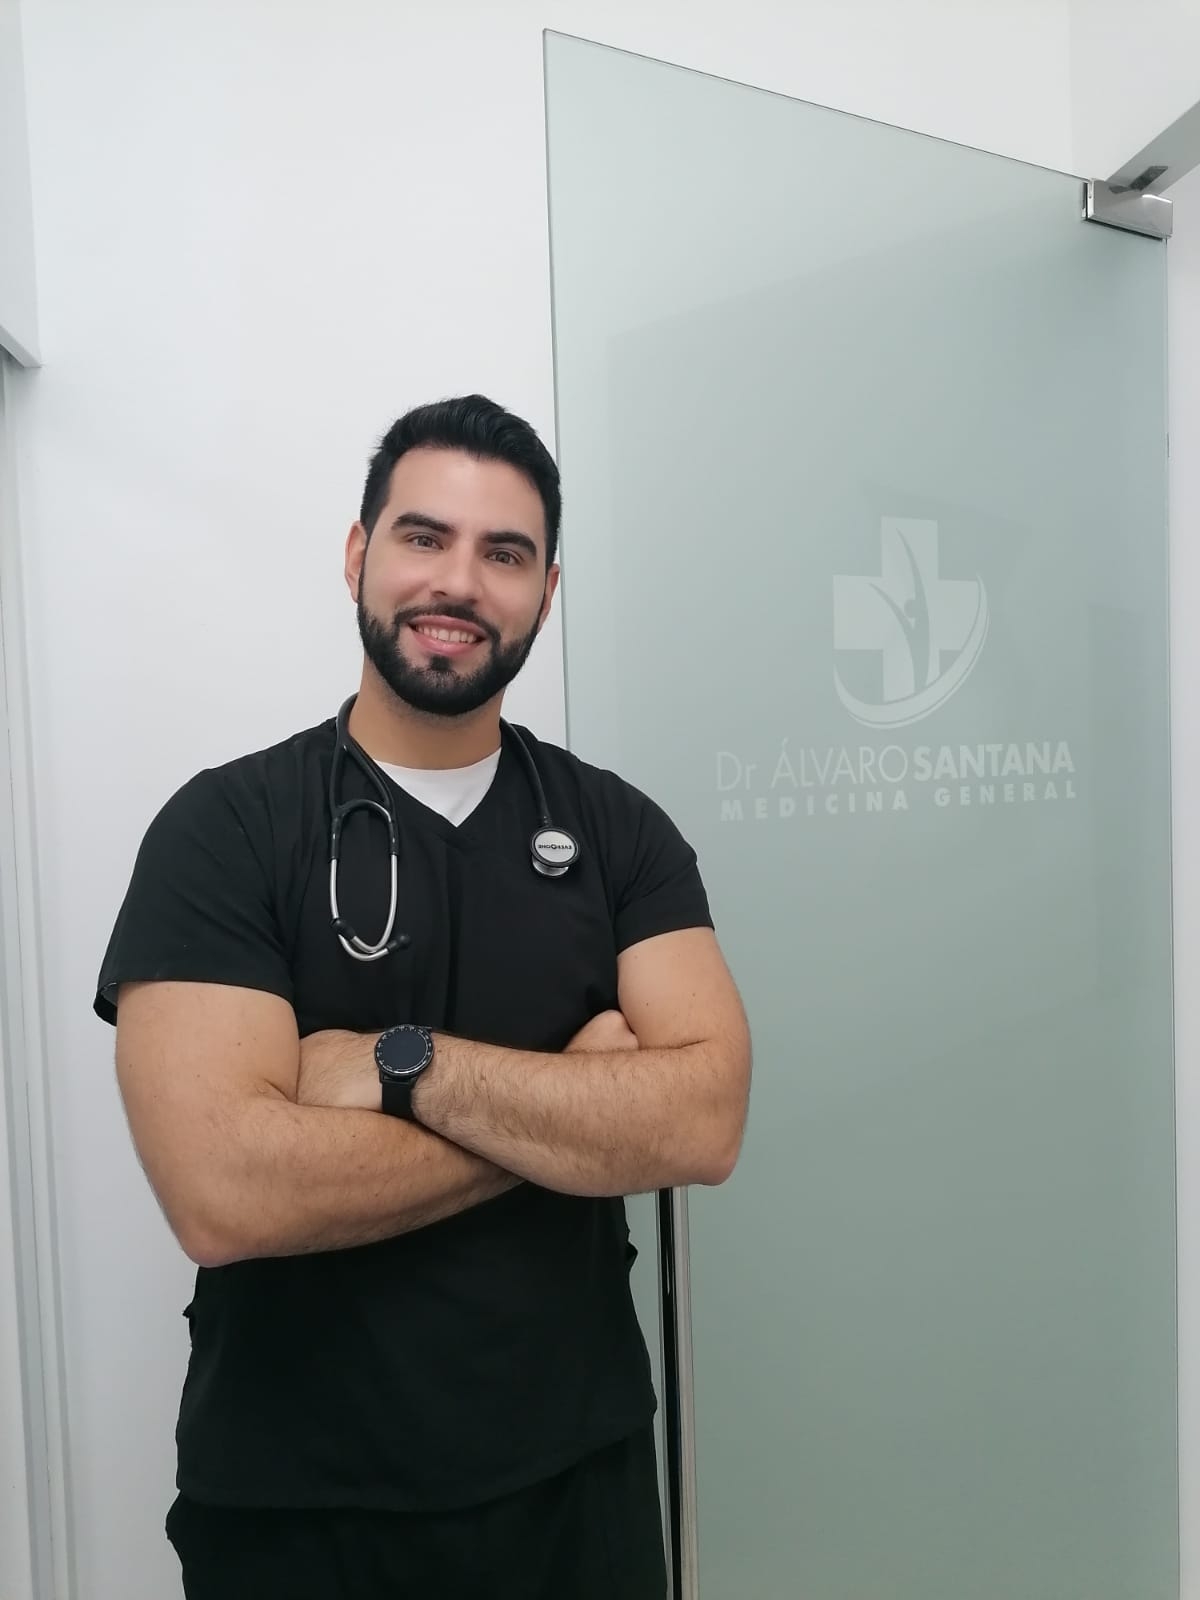 Doctor Especialista álvaro Santana Moreno